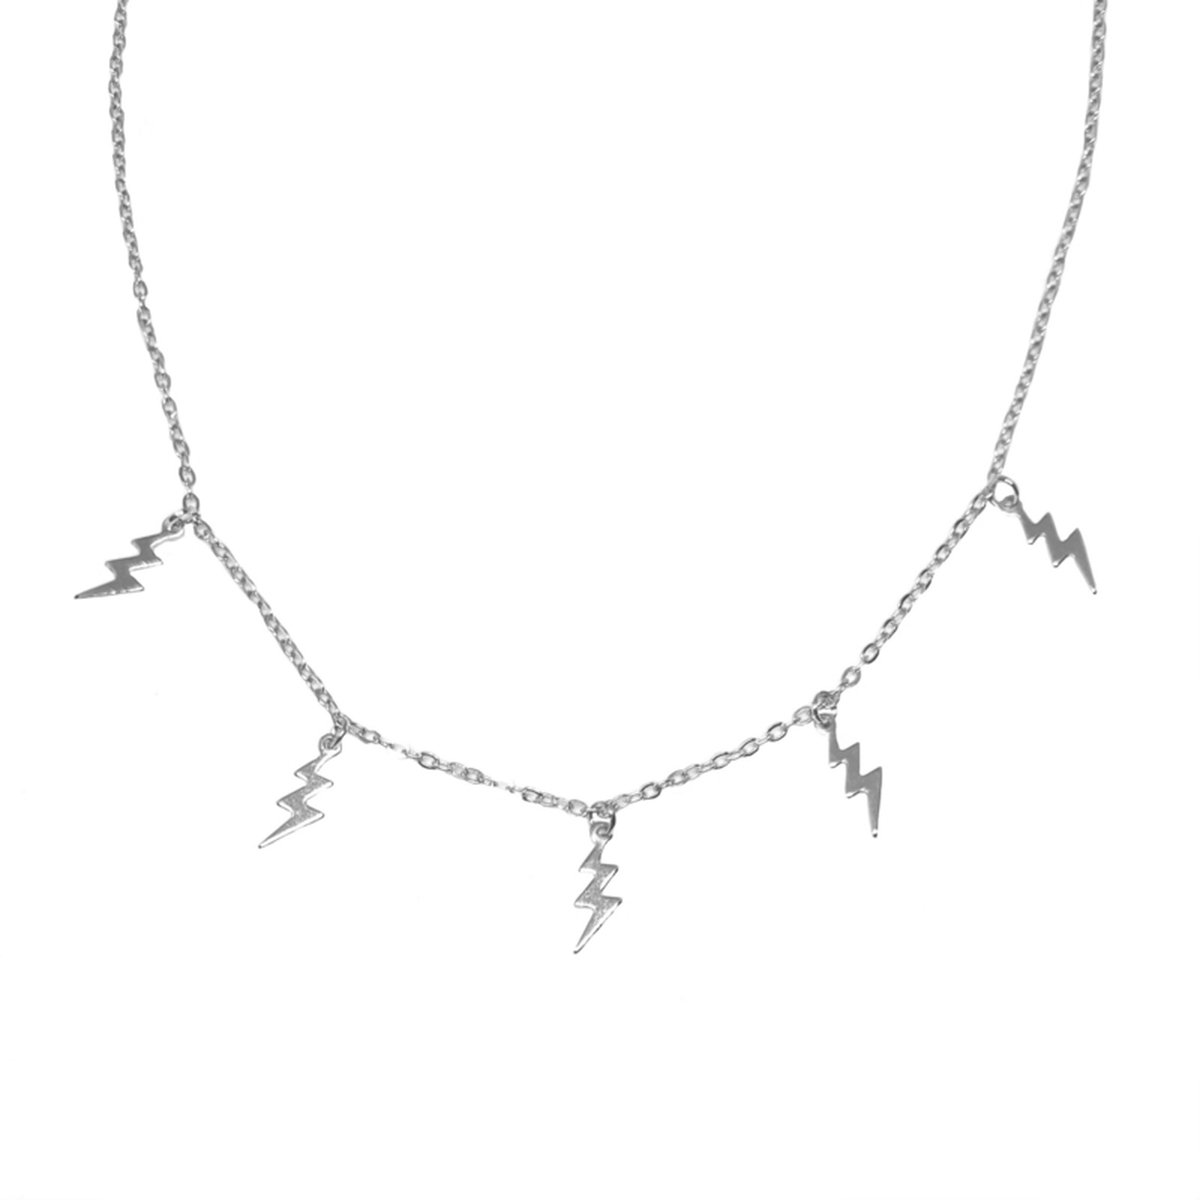 Lightning necklace - silver